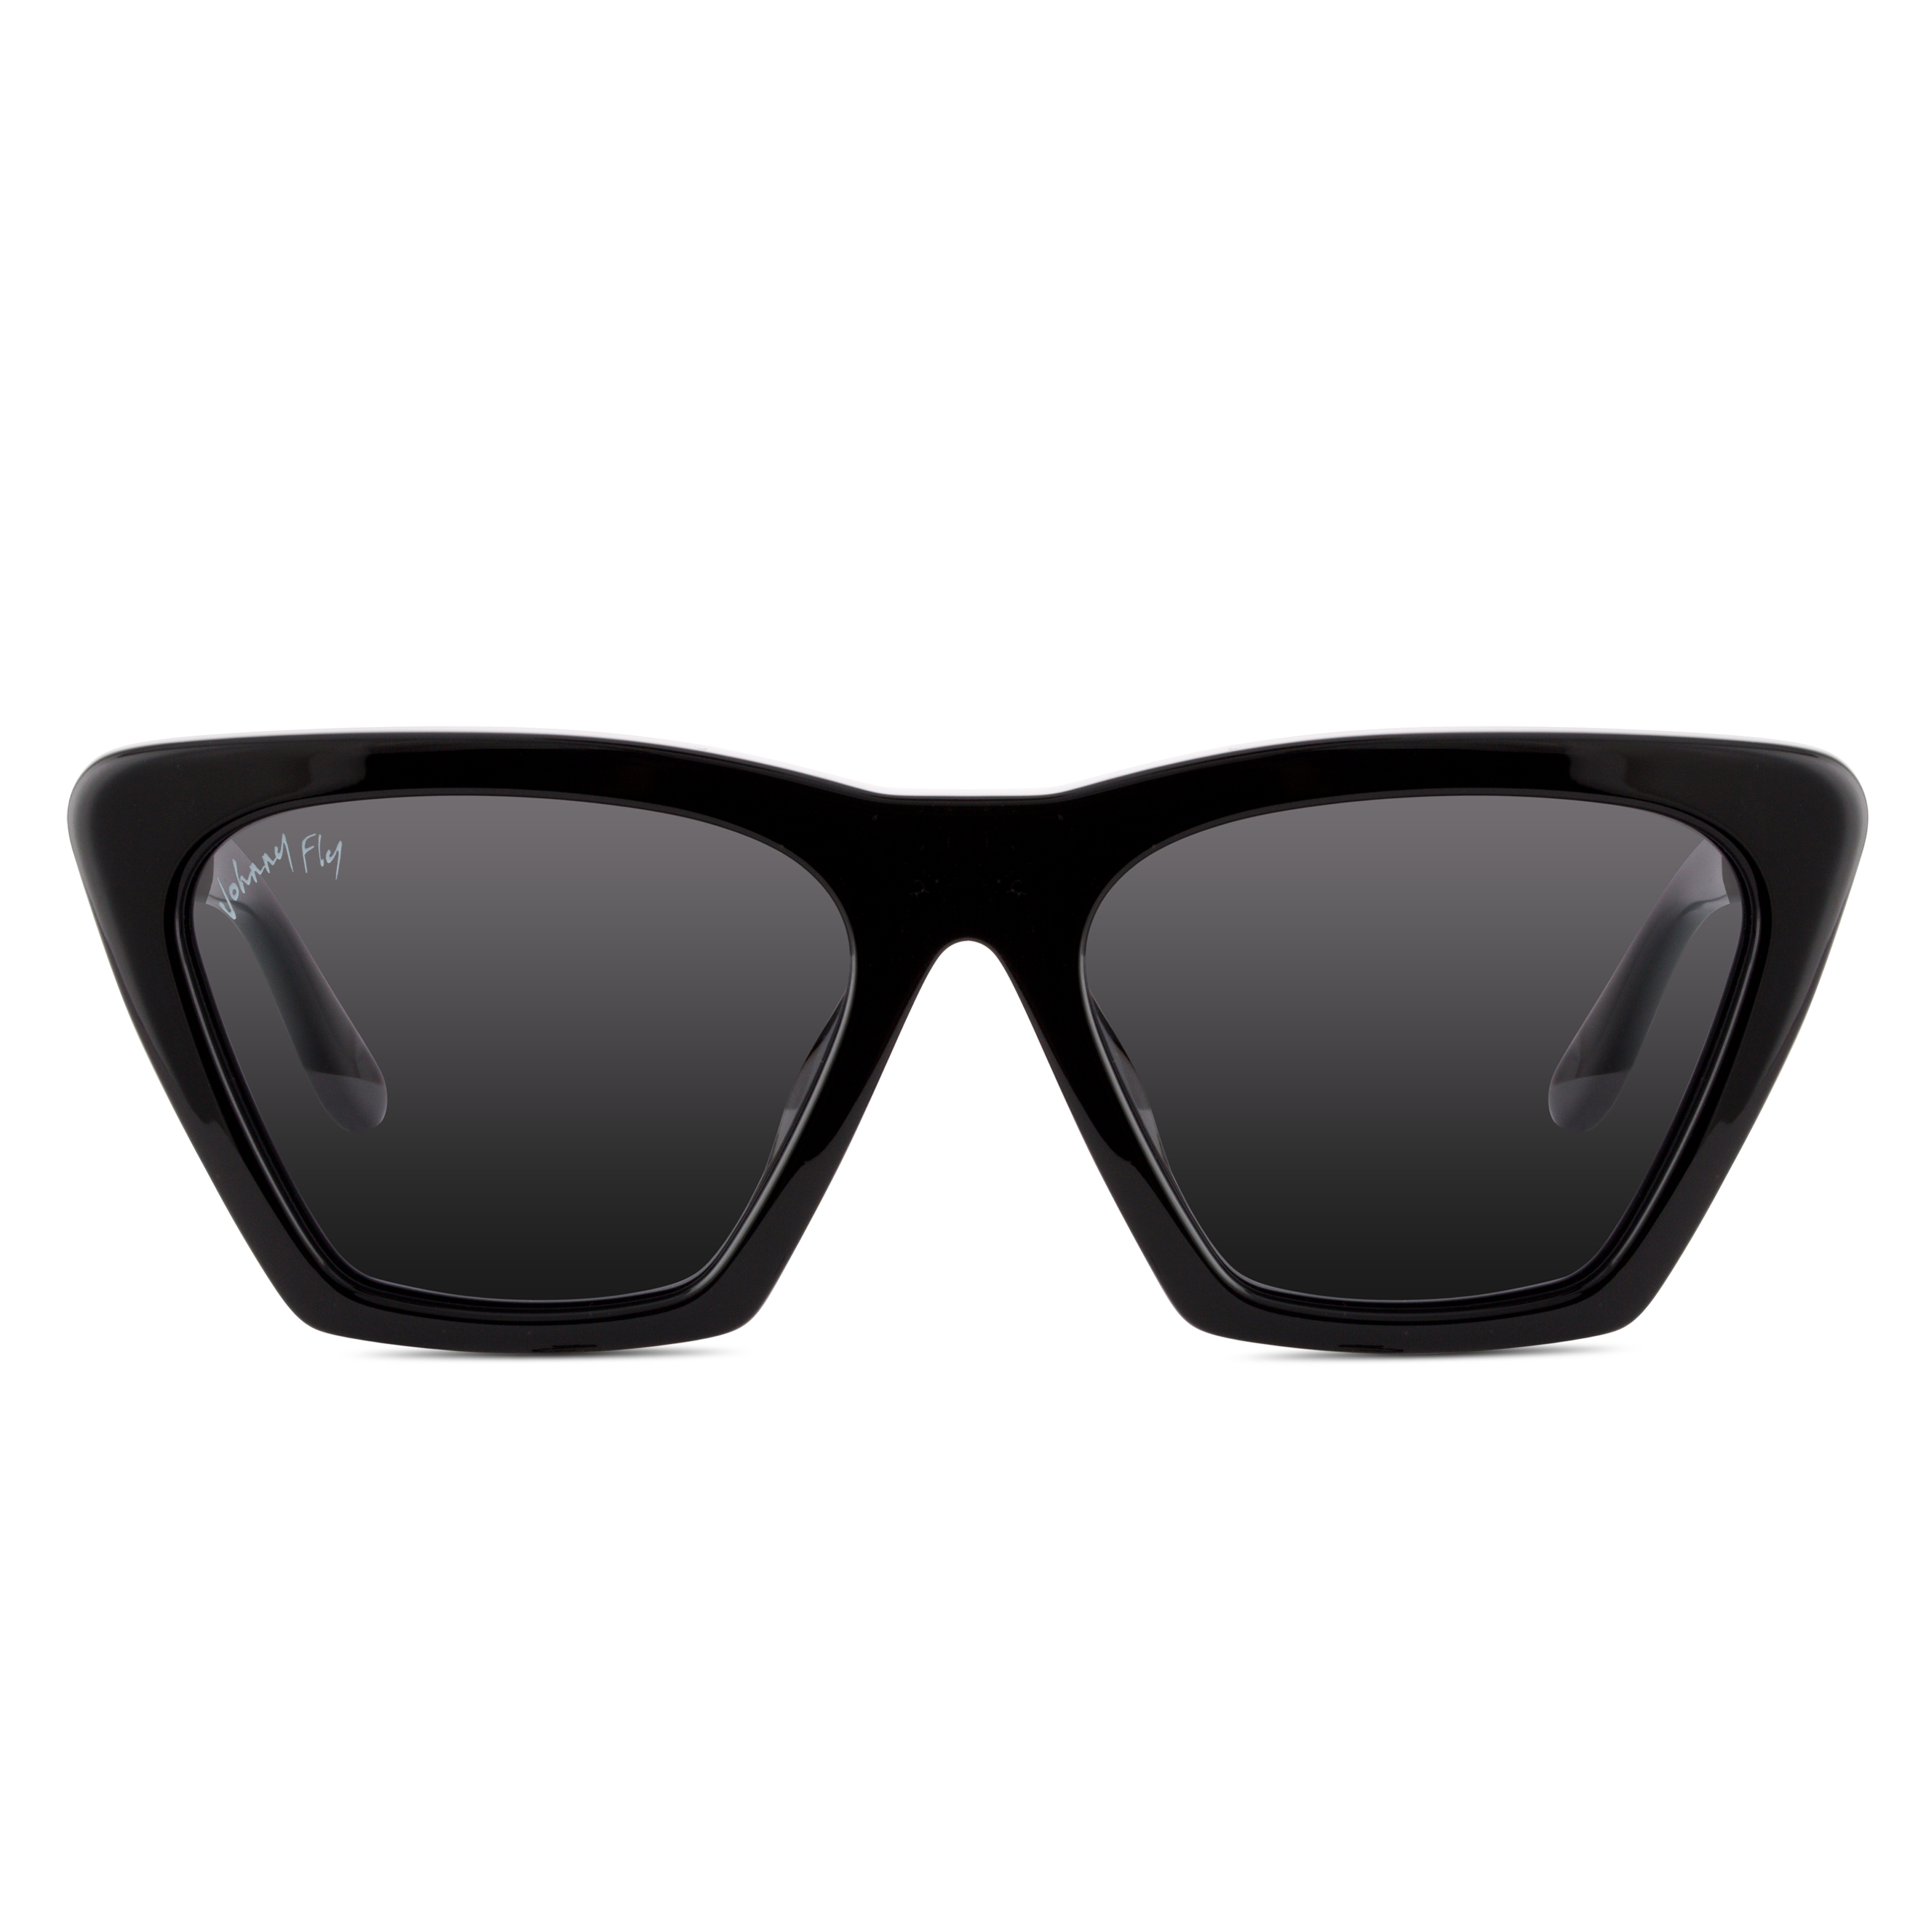 FIGURE - Gloss Black - Sunglasses - Johnny Fly Eyewear | 